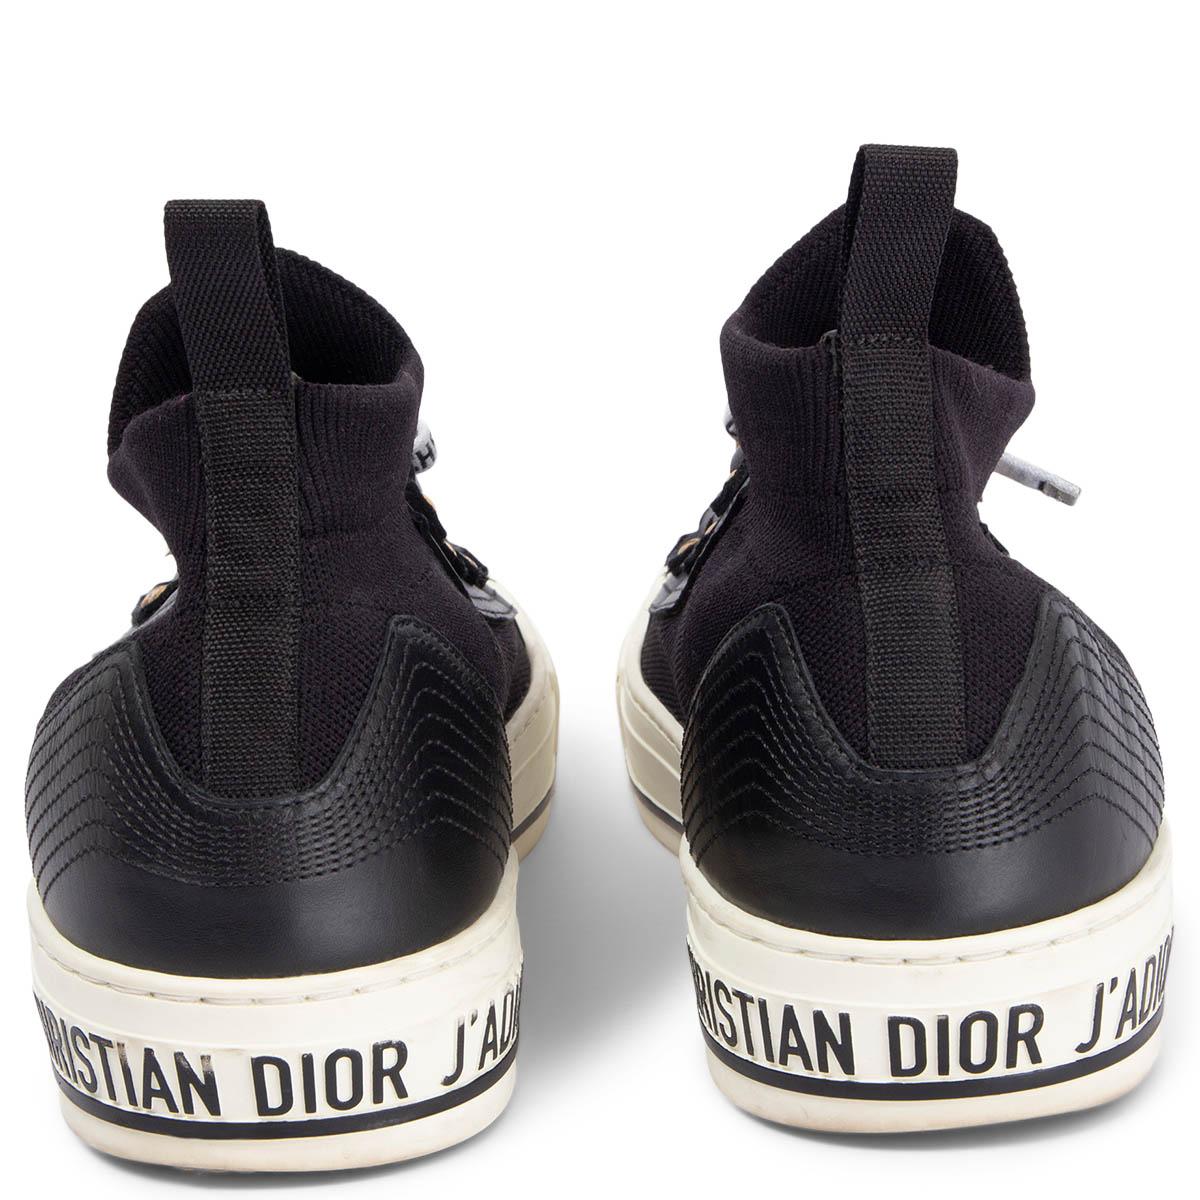 black christian dior shoes